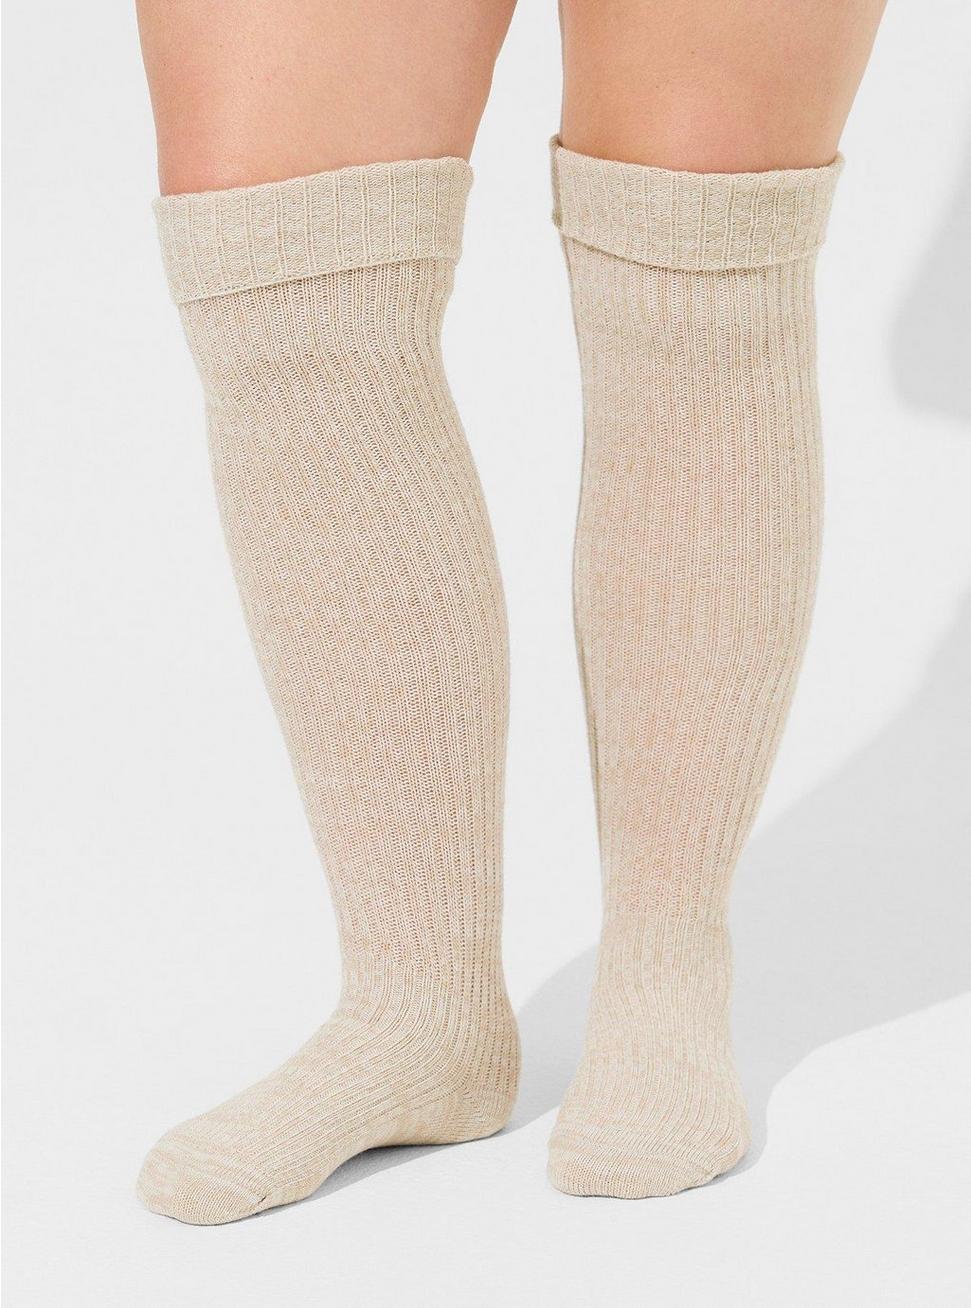 connie gonzaga add photo torrid knee high socks